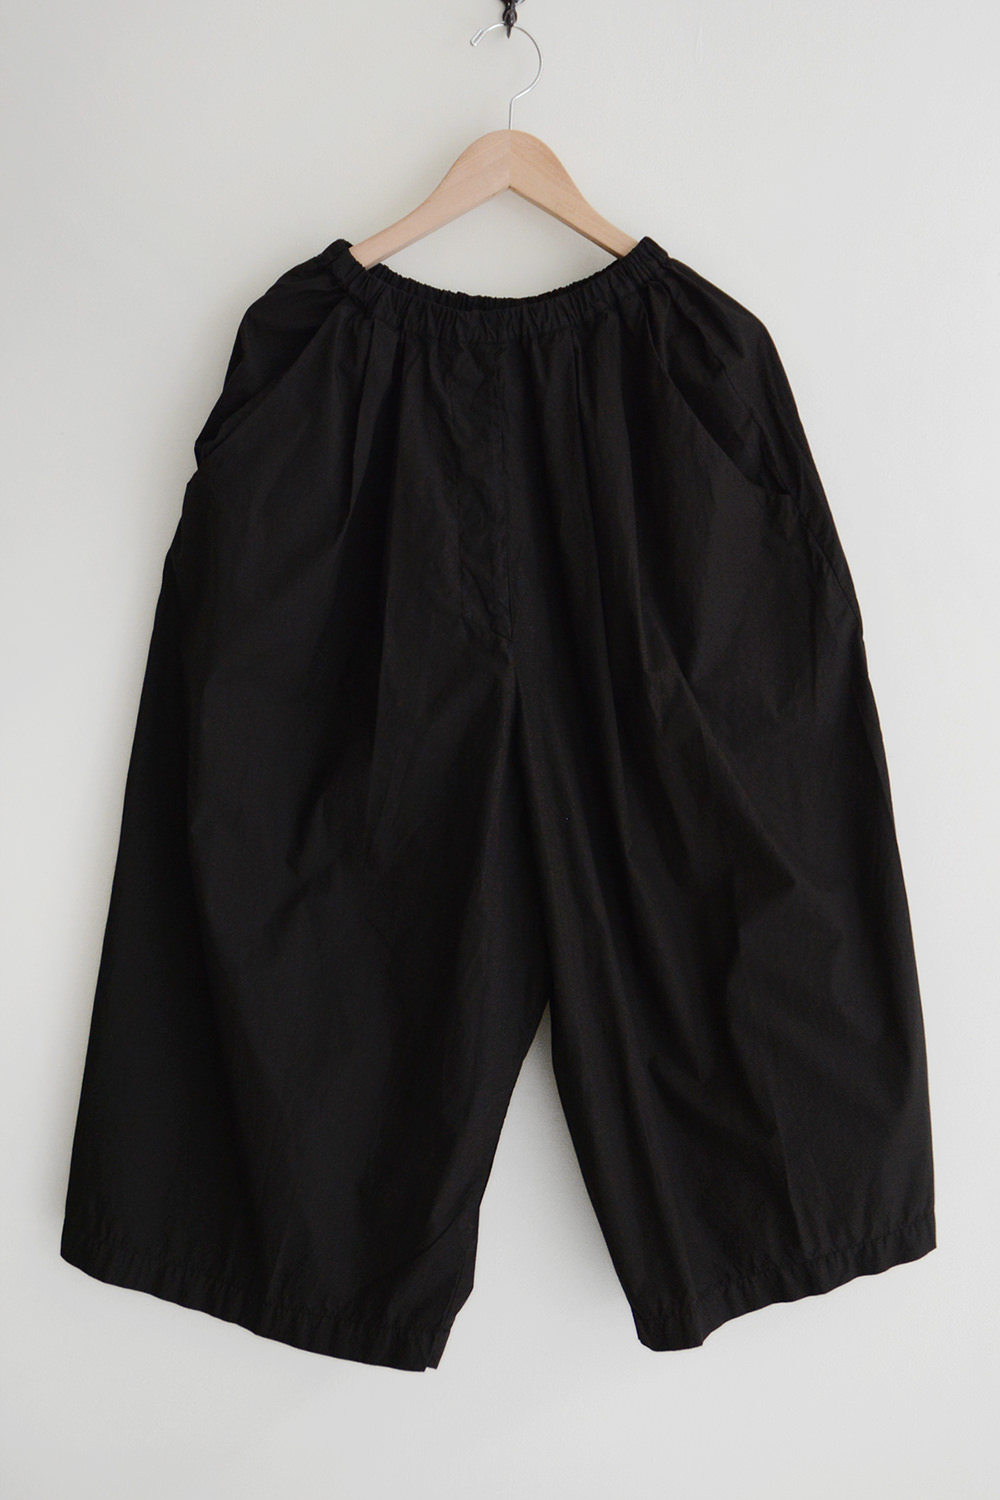 Manuelle Guibal Cotton Pants Wide Style Black Top Picture